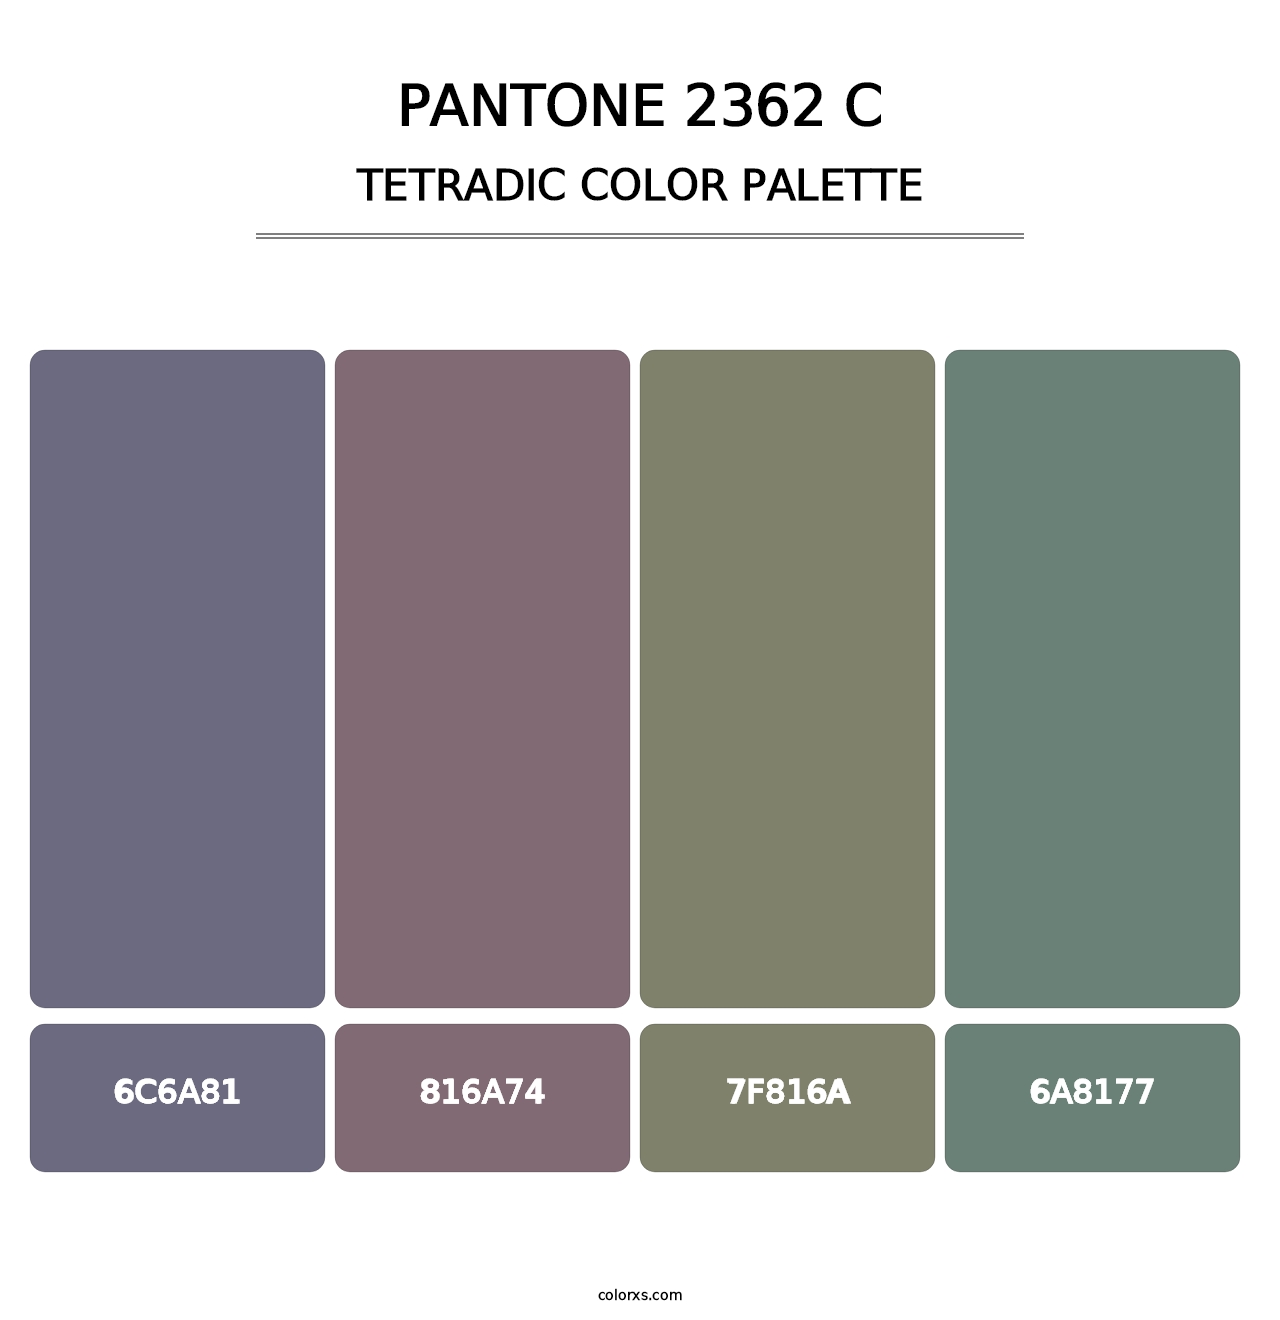 PANTONE 2362 C - Tetradic Color Palette